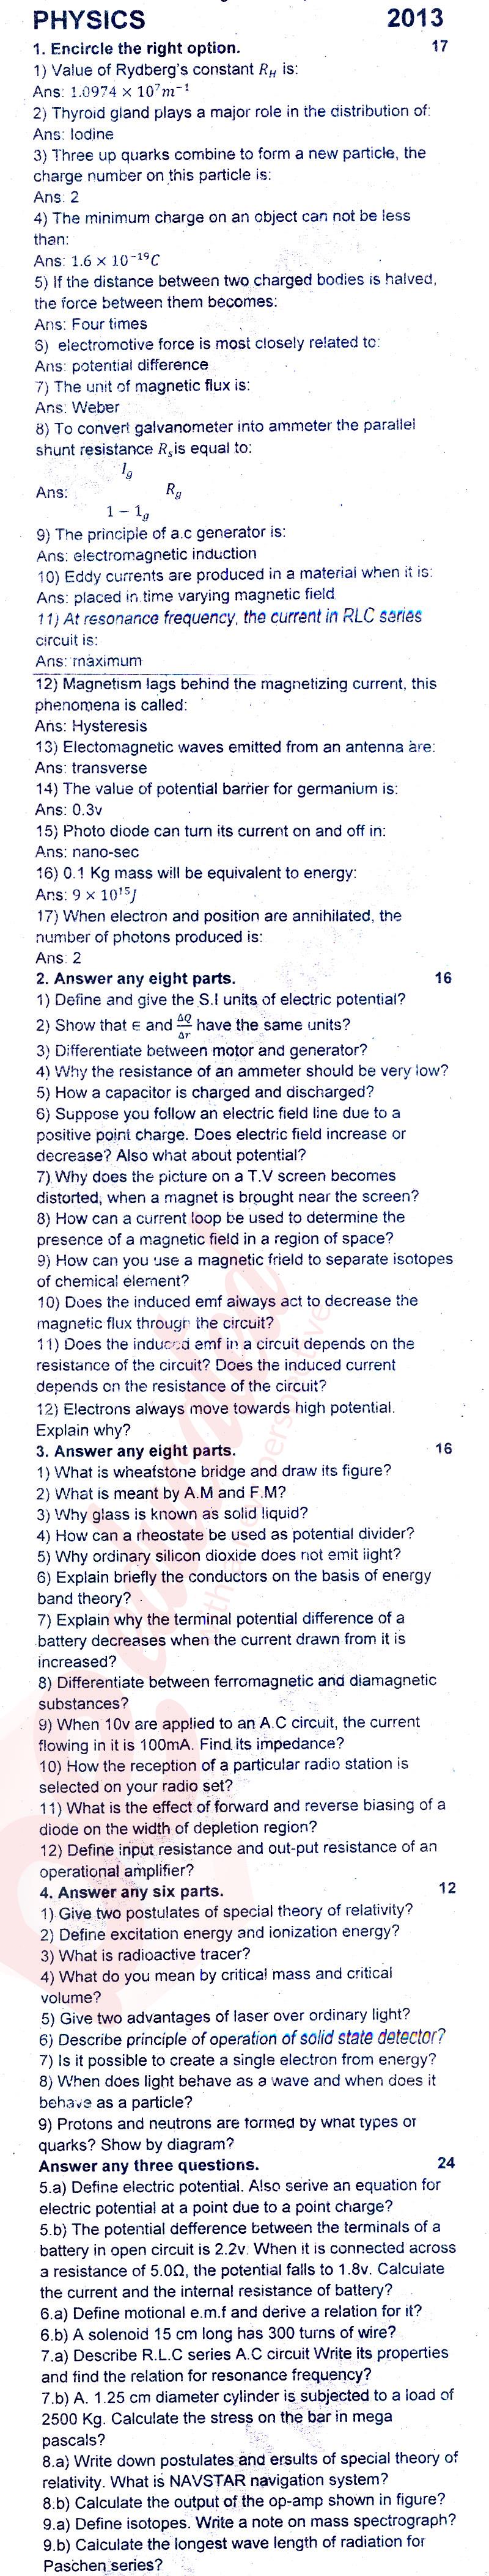 Physics FSC Part 2 Past Paper Group 1 BISE Rawalpindi 2013